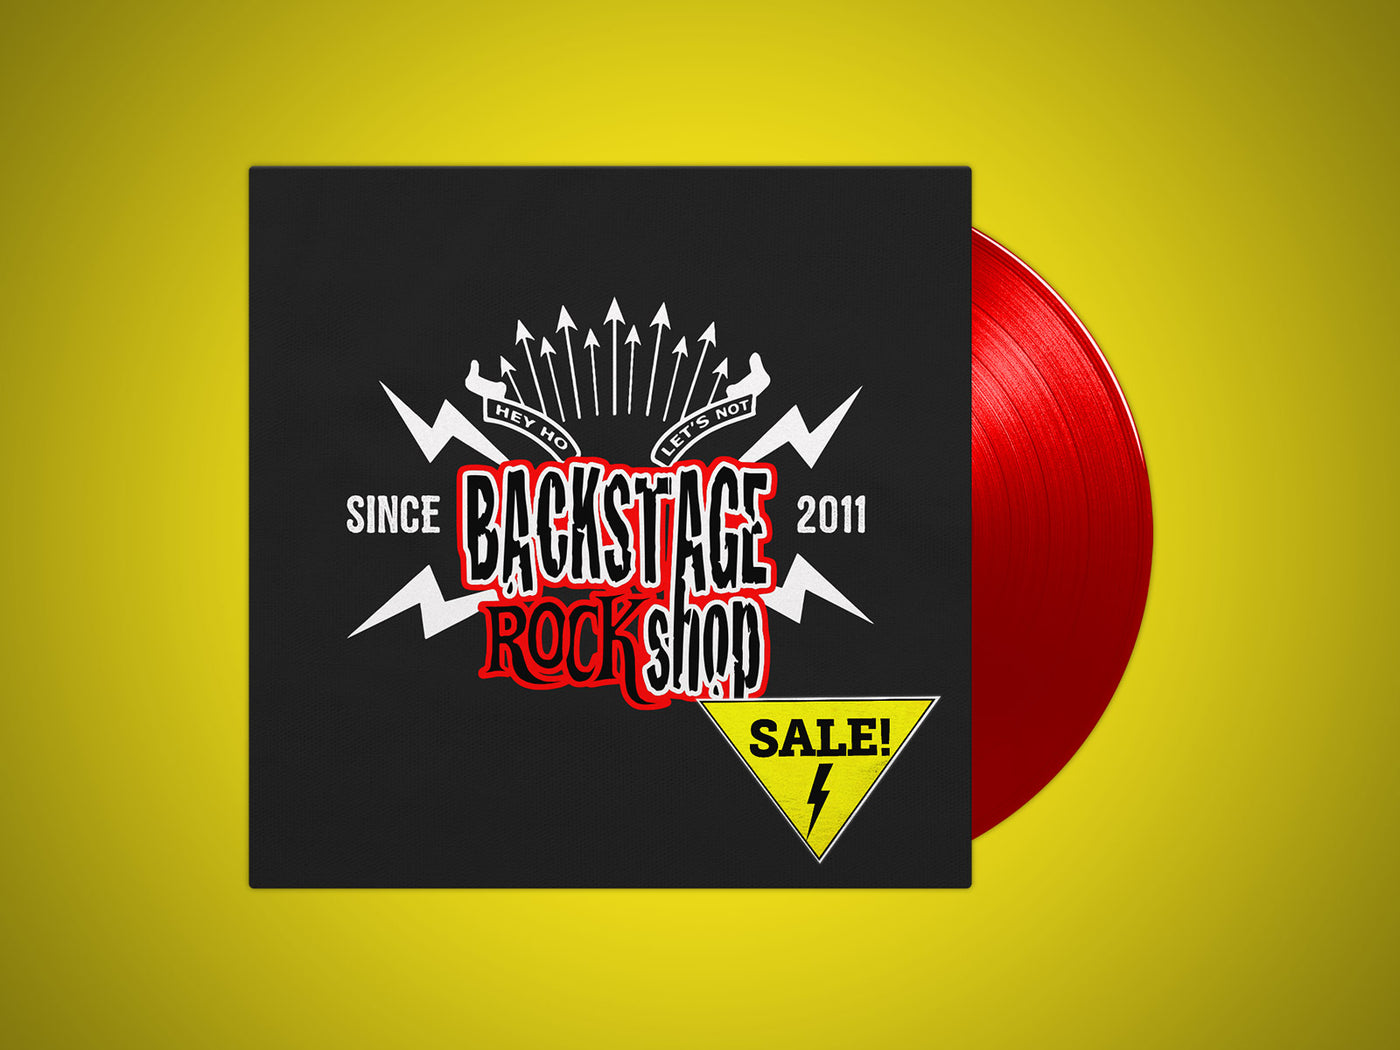 Backstage Rock Shop Sale